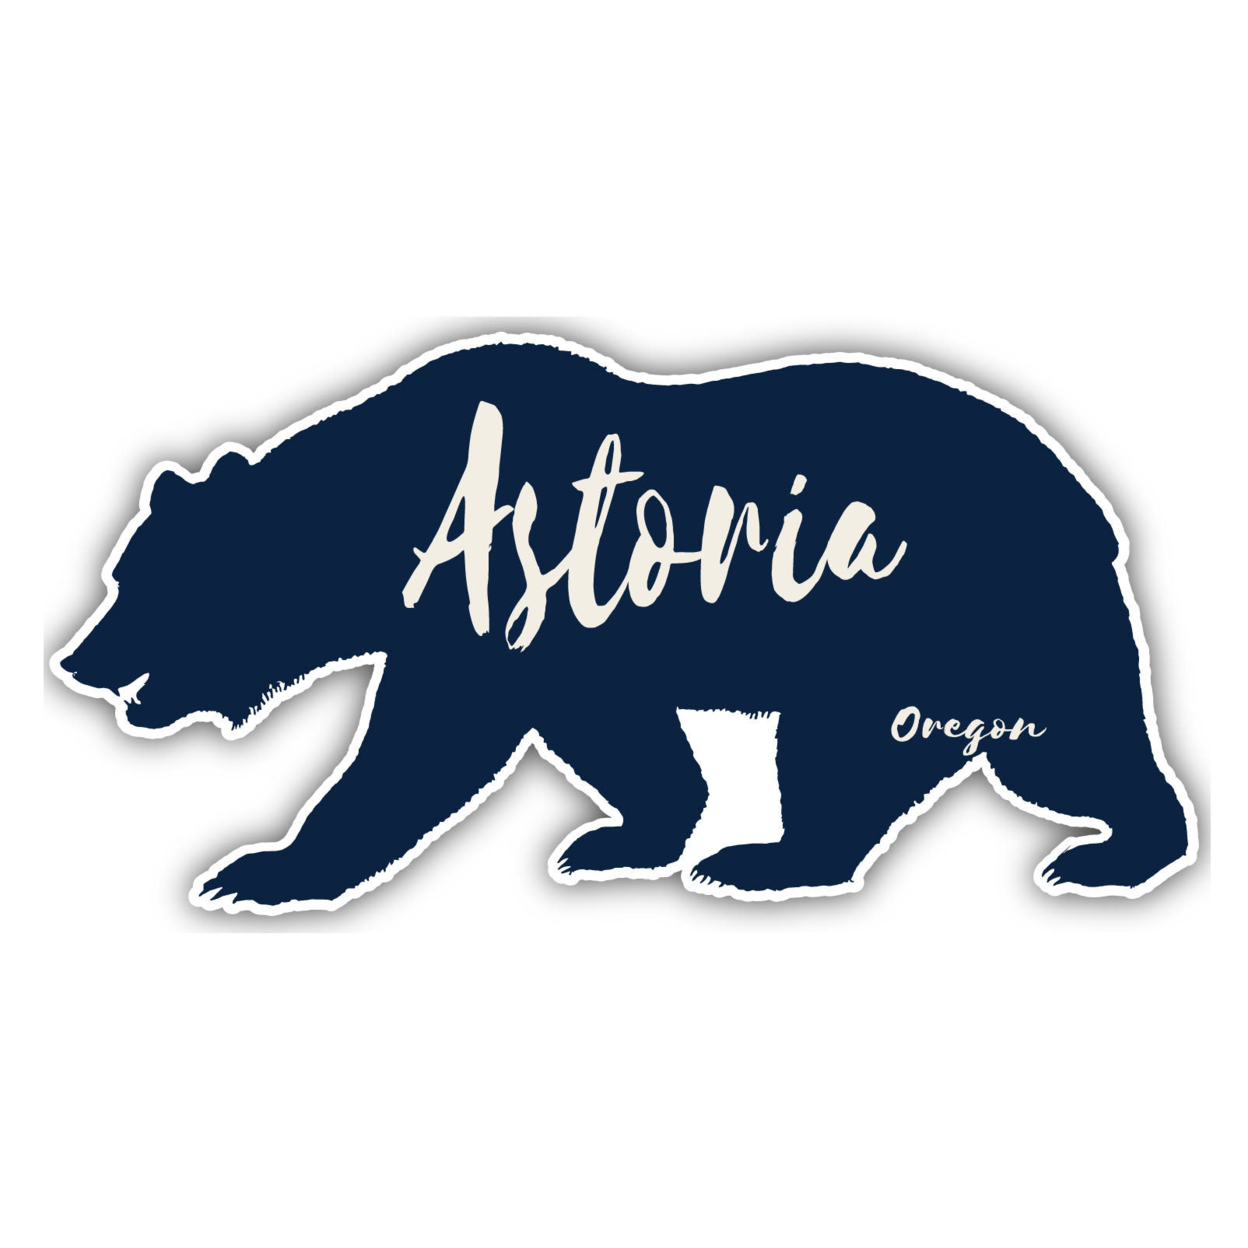 Astoria Oregon Souvenir Decorative Stickers (Choose Theme And Size) - Single Unit, 2-Inch, Camp Life